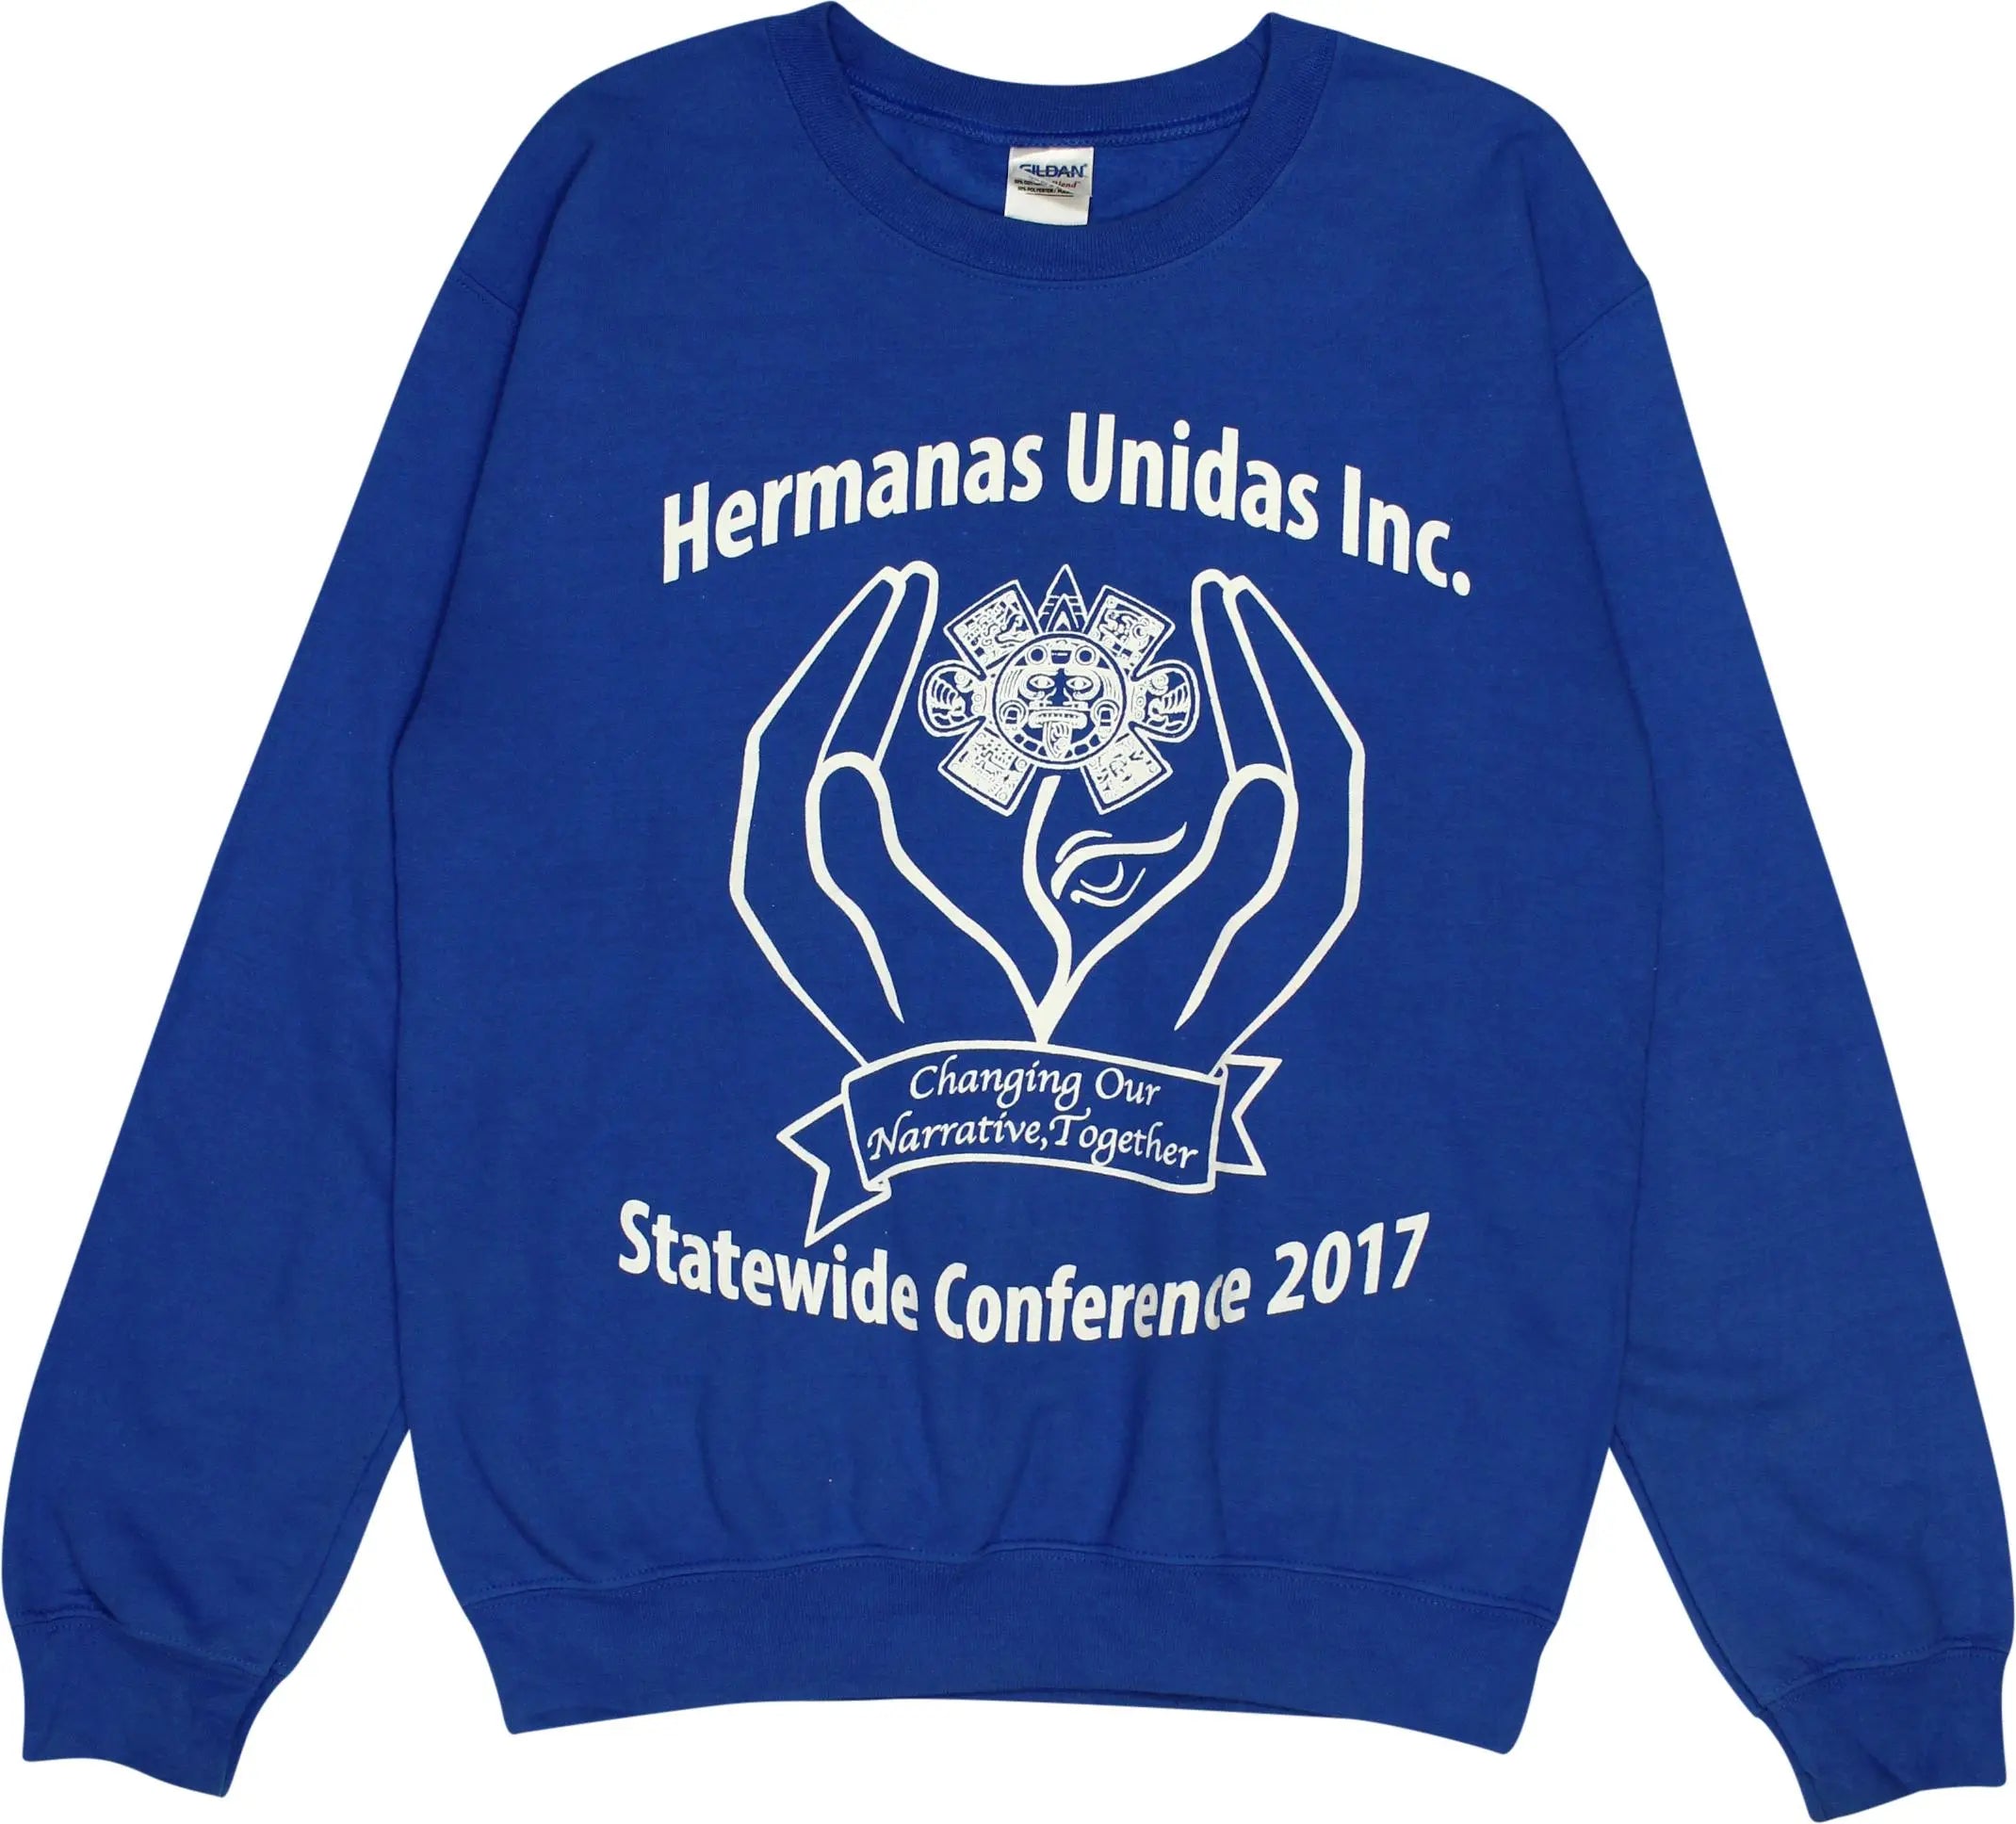 Gildan - Hermanas Unidas Inc. Sweater- ThriftTale.com - Vintage and second handclothing